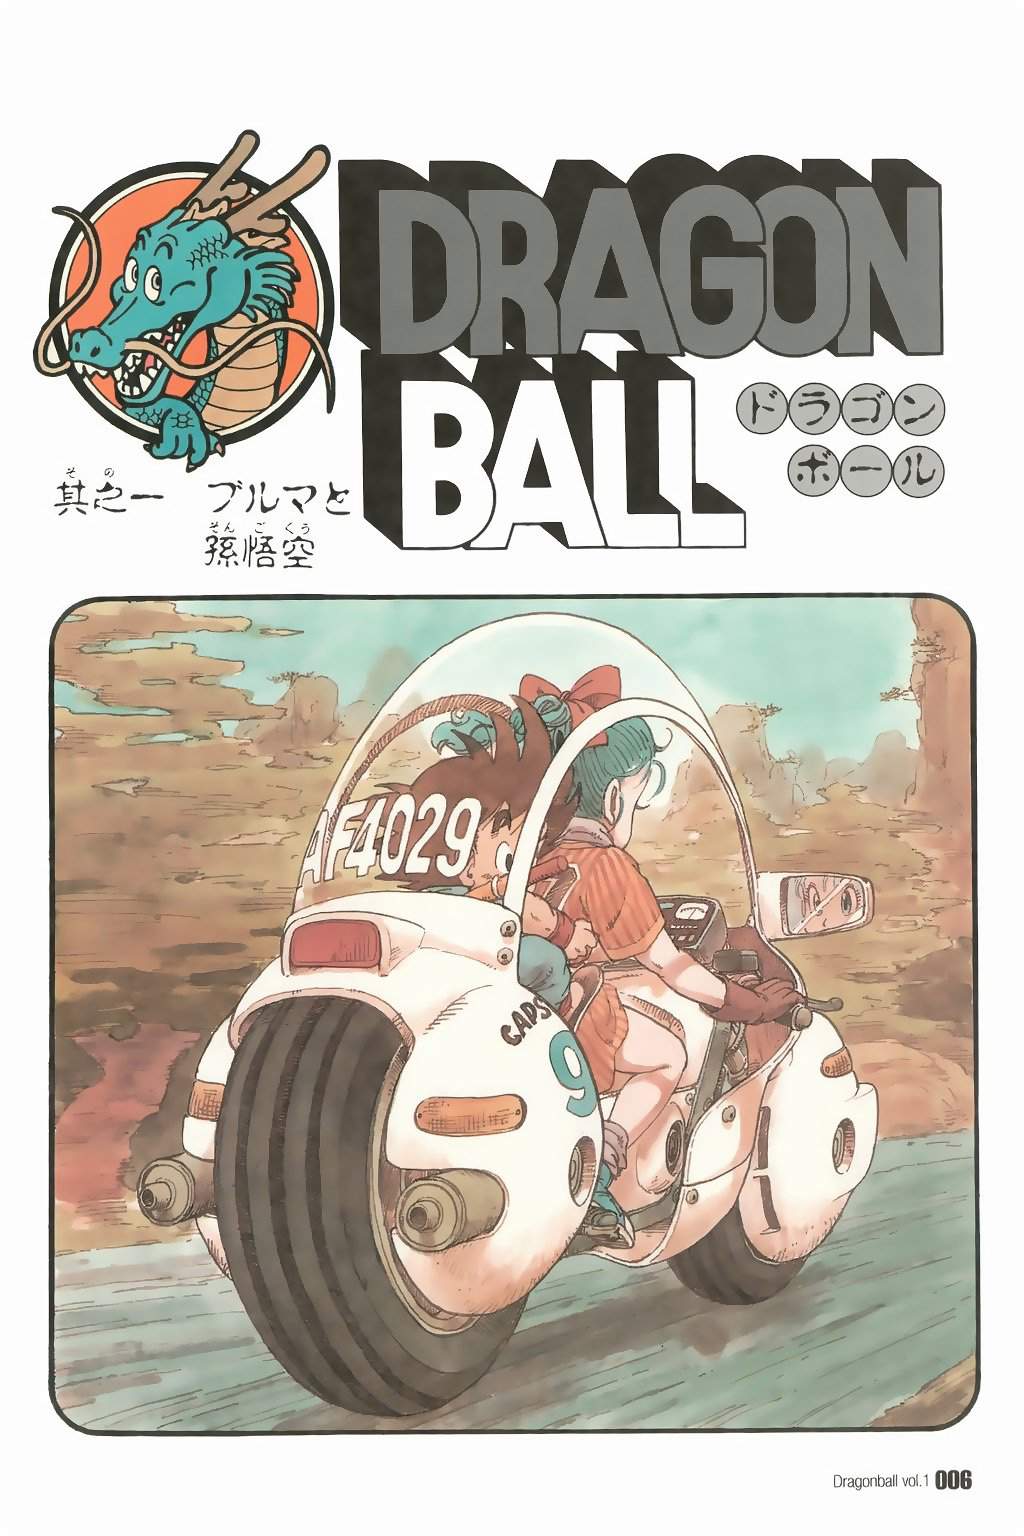 DUB] Dragon Ball Super - Episode #122 - Discussion Thread! : r/dbz